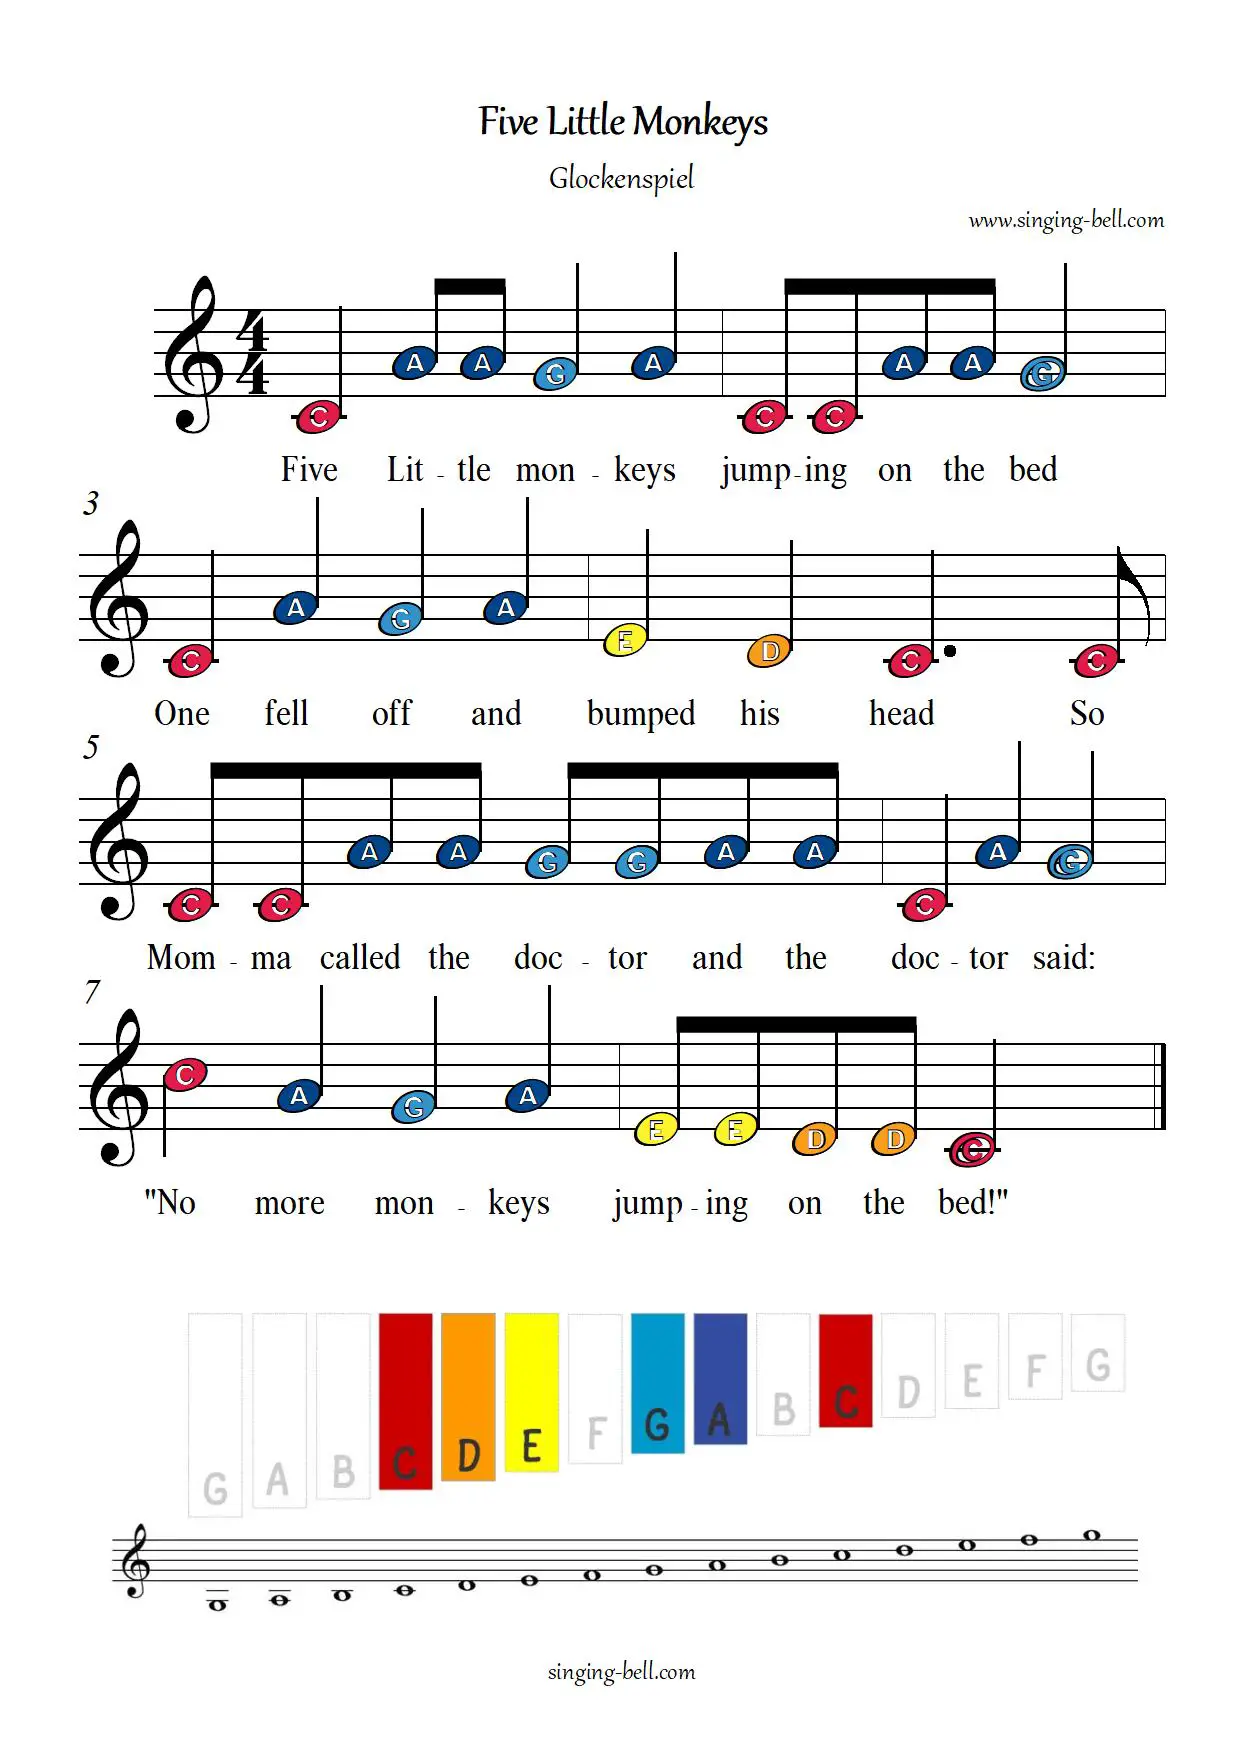 Five Little Monkeys free xylophone glockenspiel sheet music color notes chart pdf